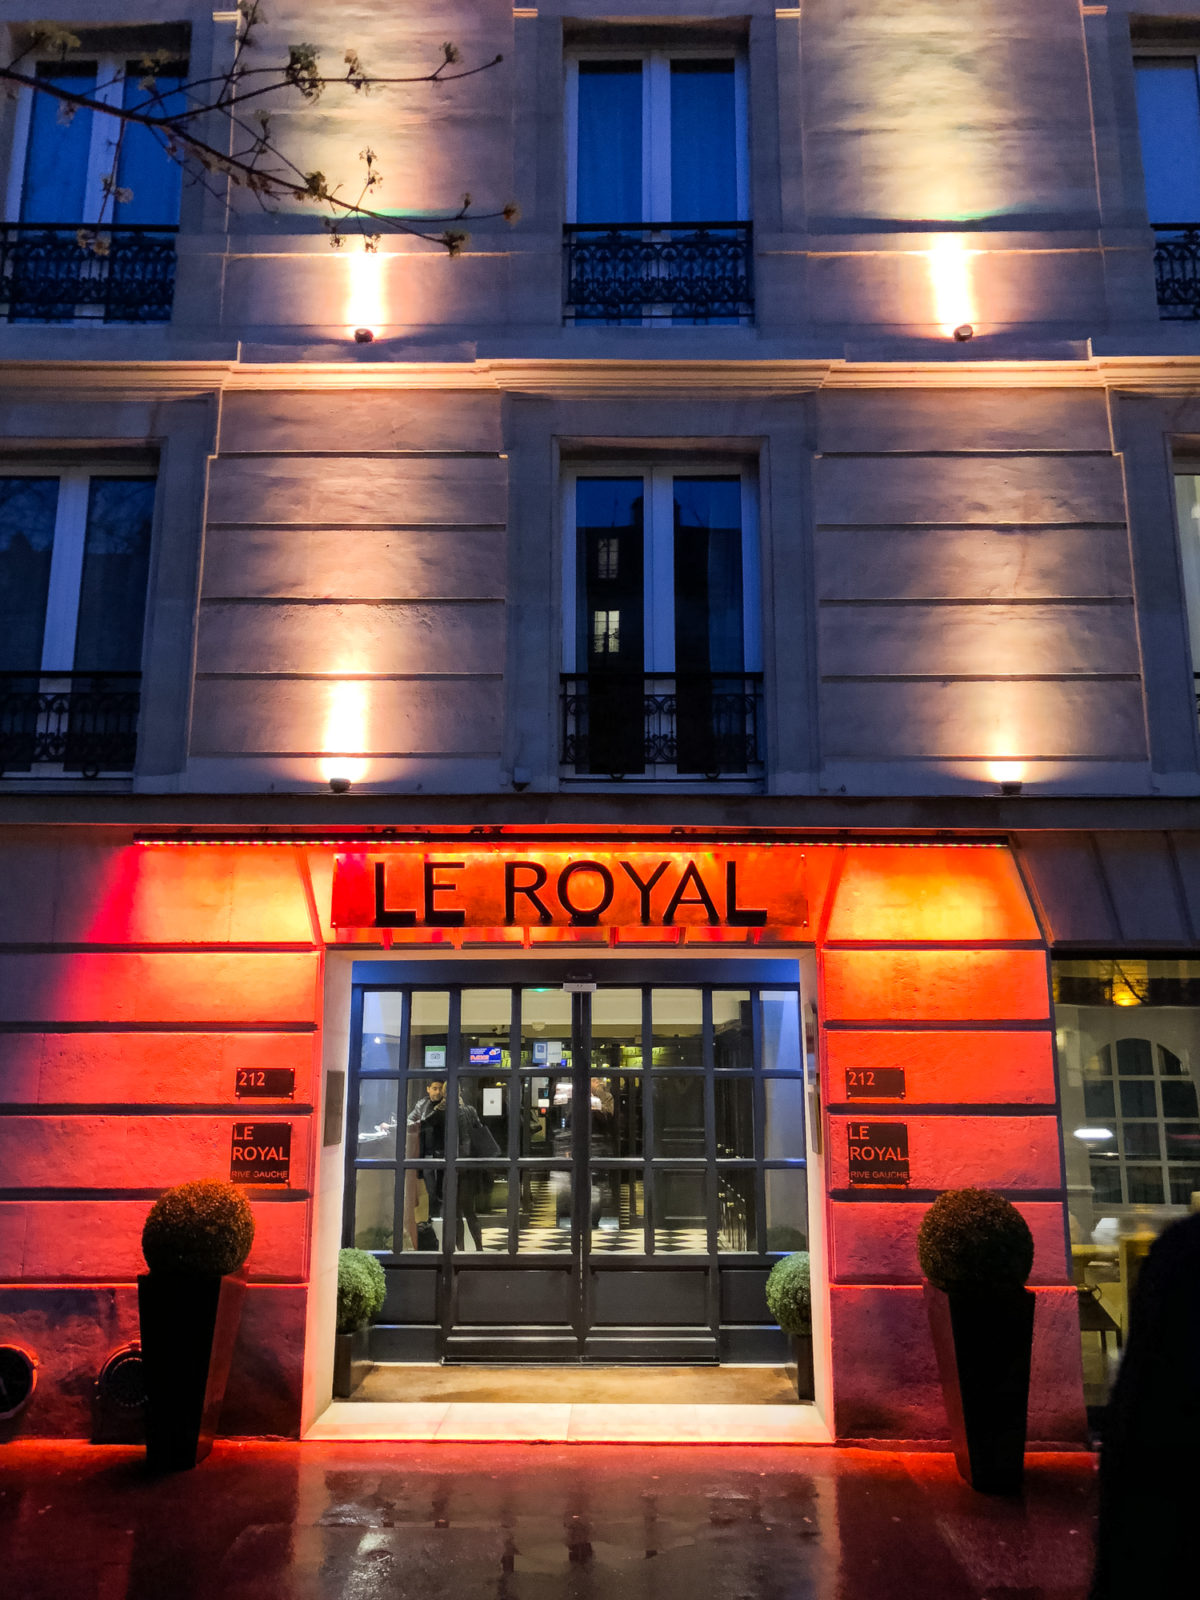 Le Royal Hotel on Raspail Boulevard in Paris France